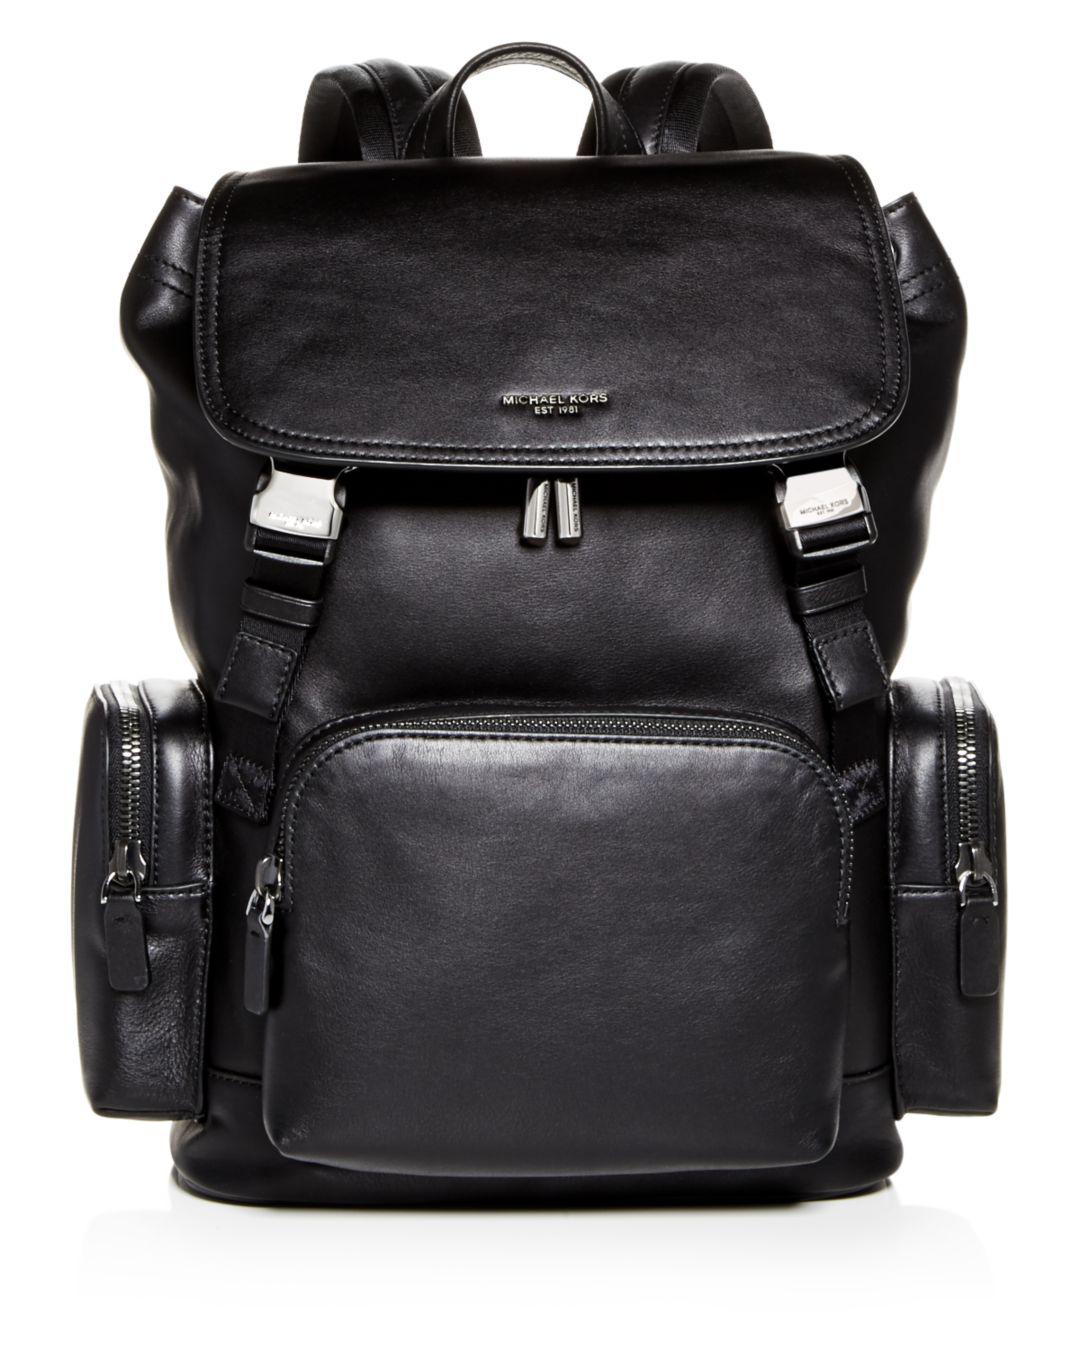 Michael Kors Henry Leather Backpack in Black for Men - Save 60% - Lyst